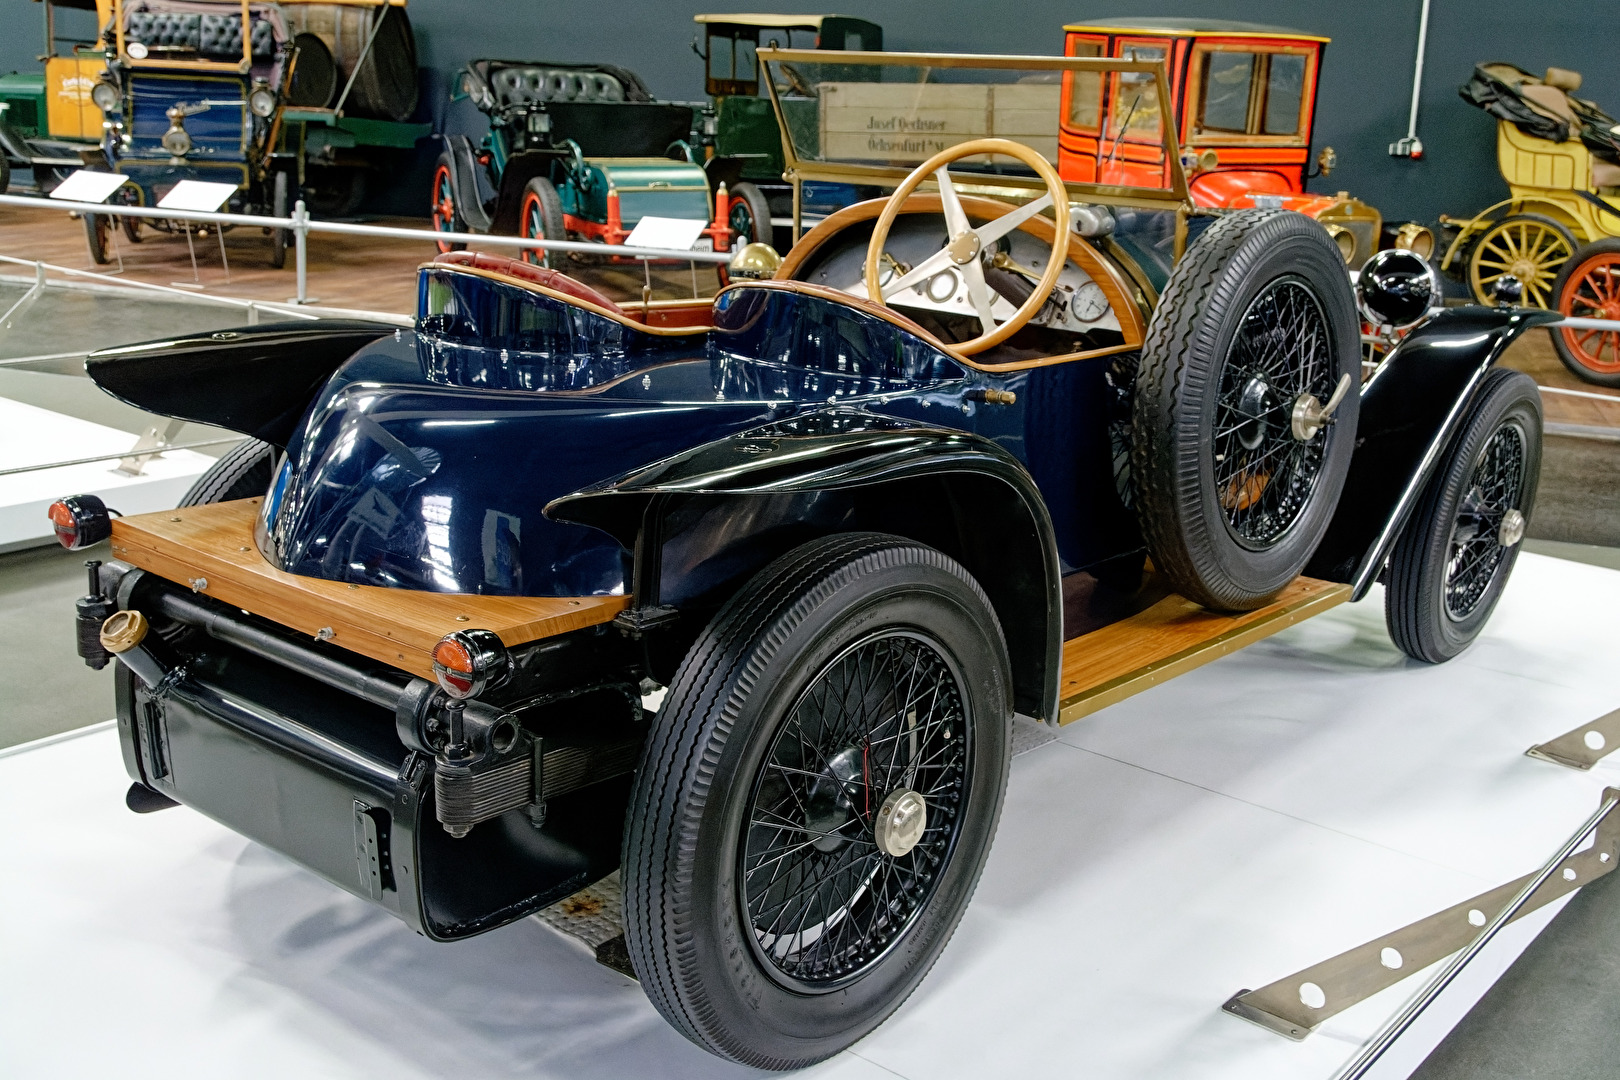 Bugatti Typ 30